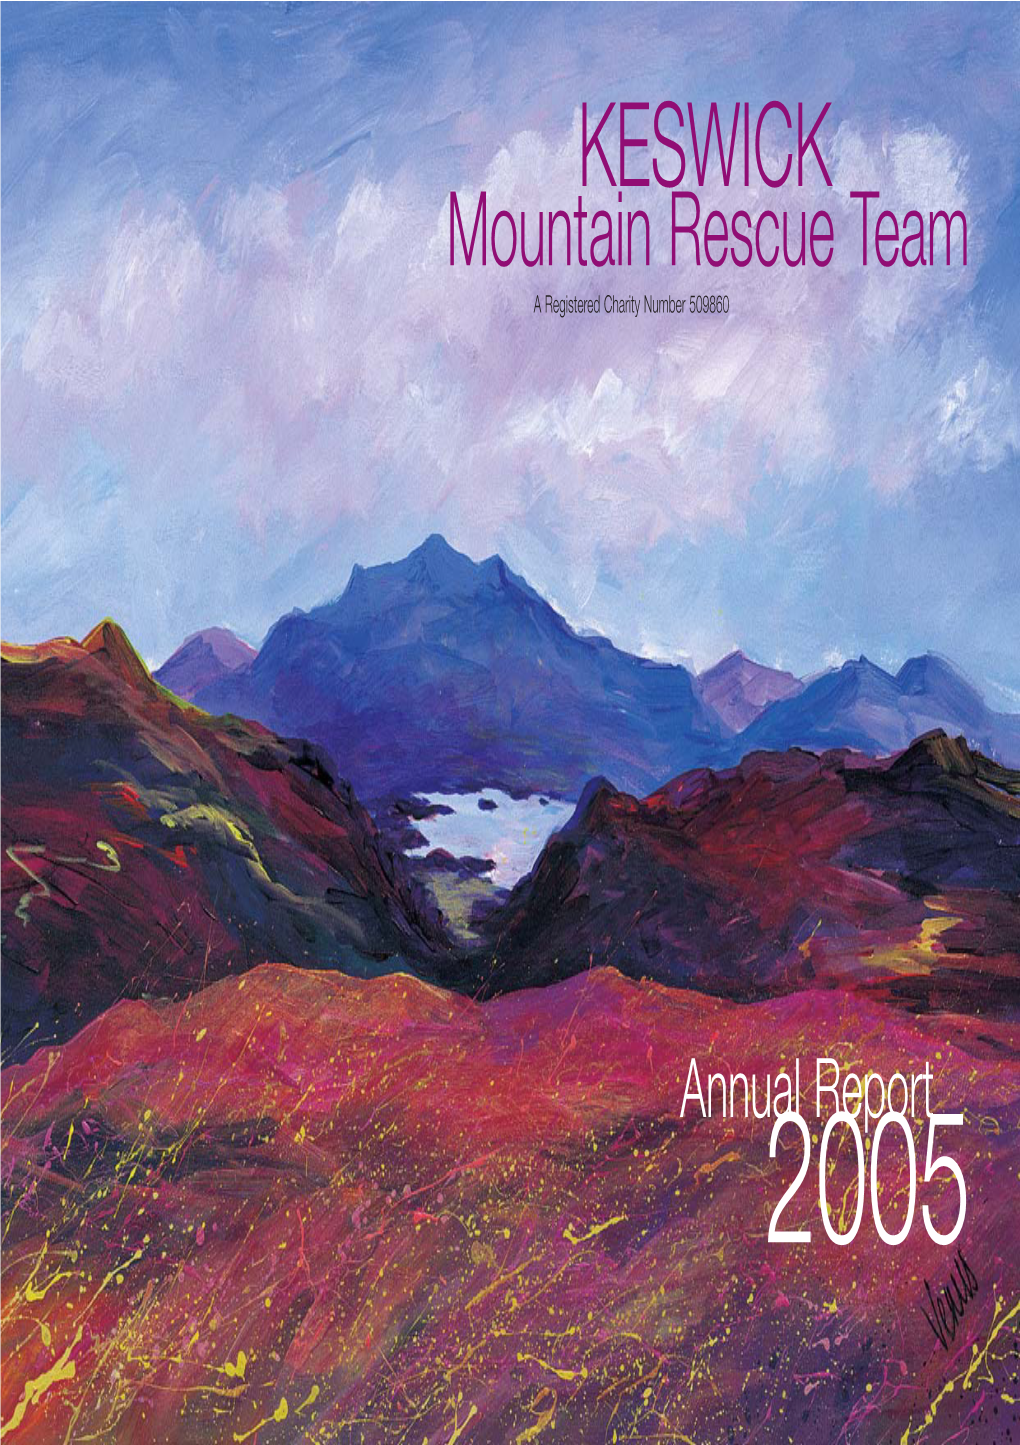 2005 Welcome Keswick Mountain Rescue Team